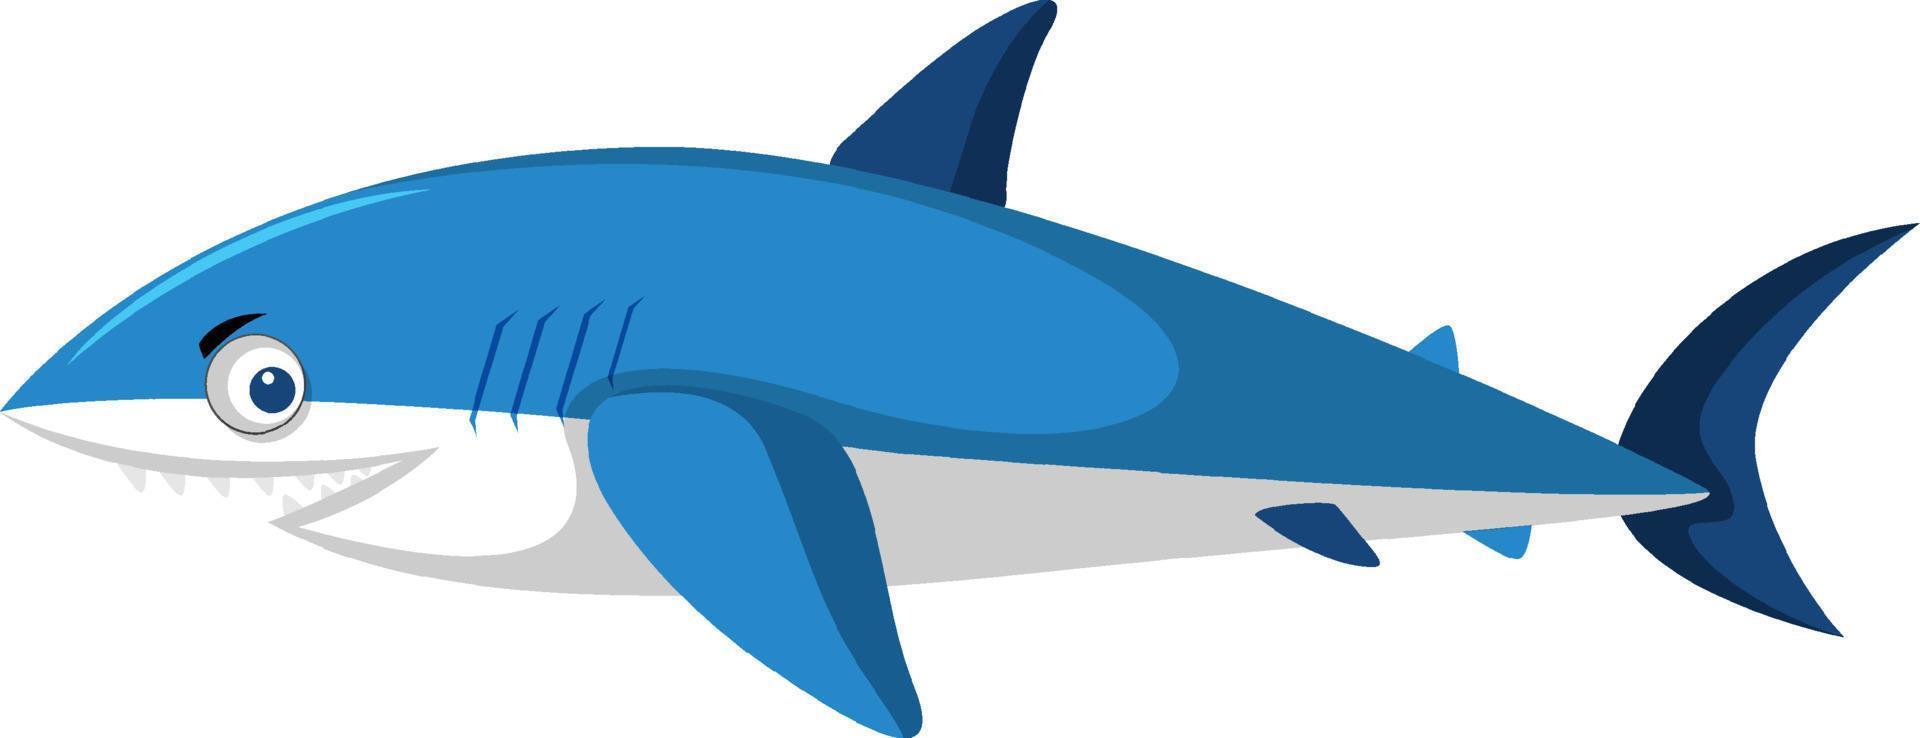 Cute shark cartoon character isolated vector